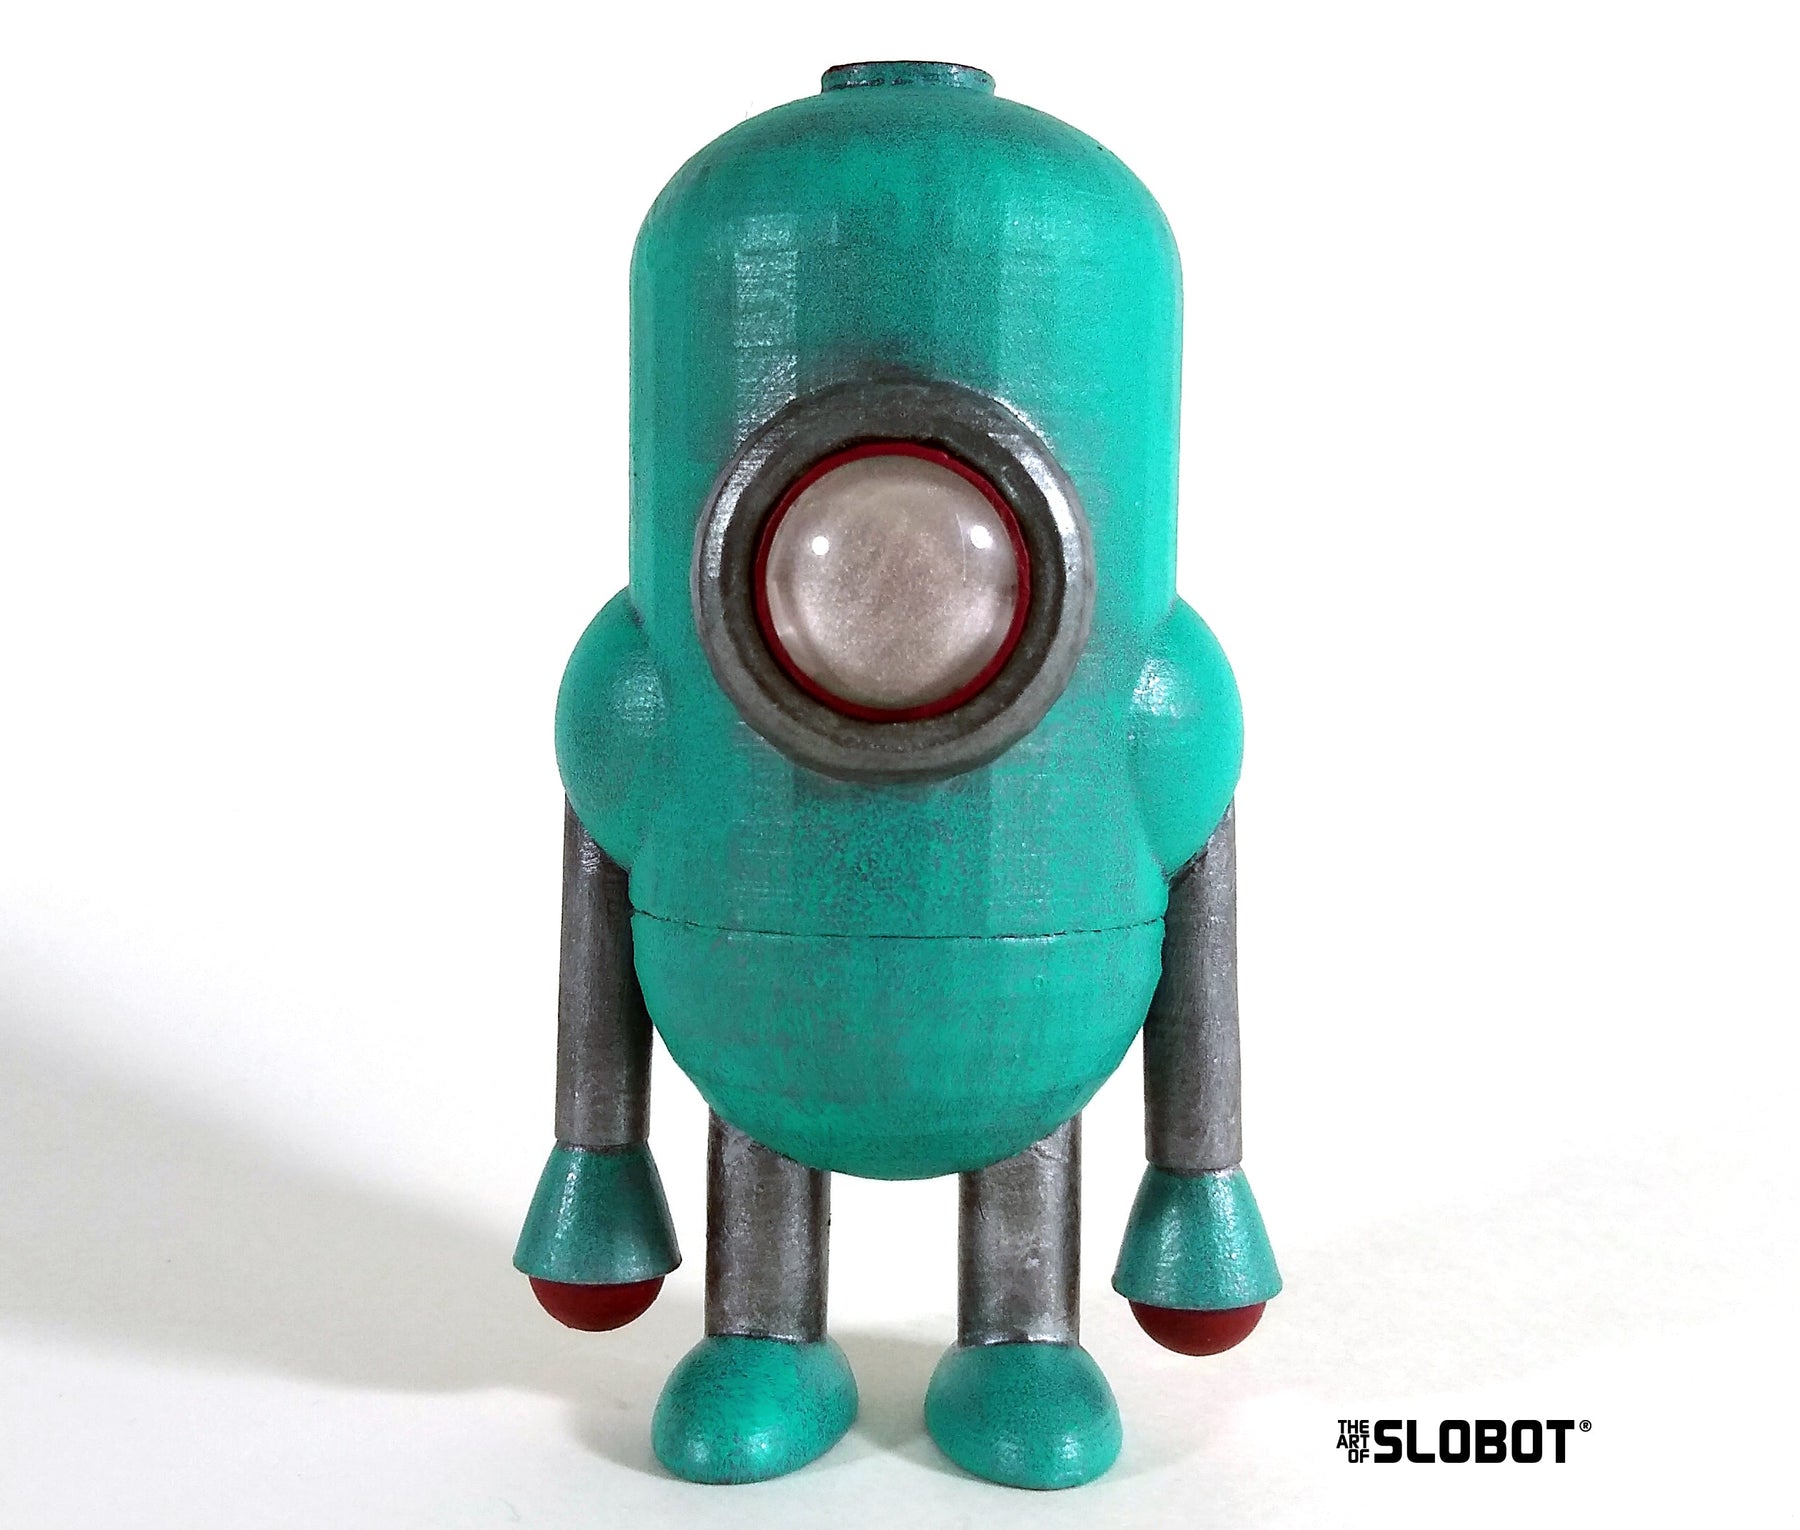 Slobot Carl 5 MV1 Tenacious Exclusive 4.5" robot figure available now ! ! !